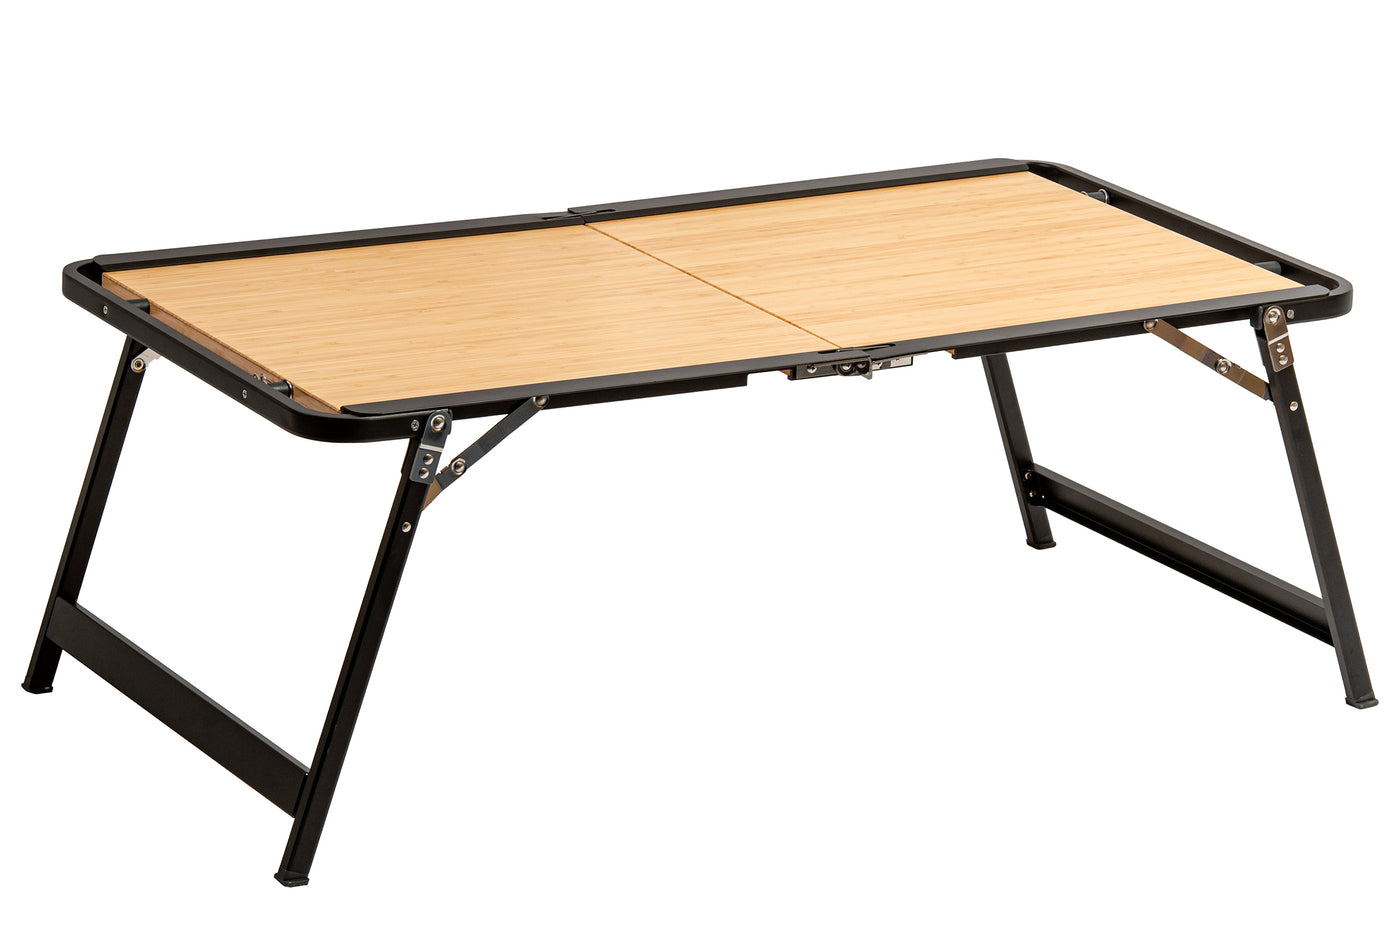 sleek modern table